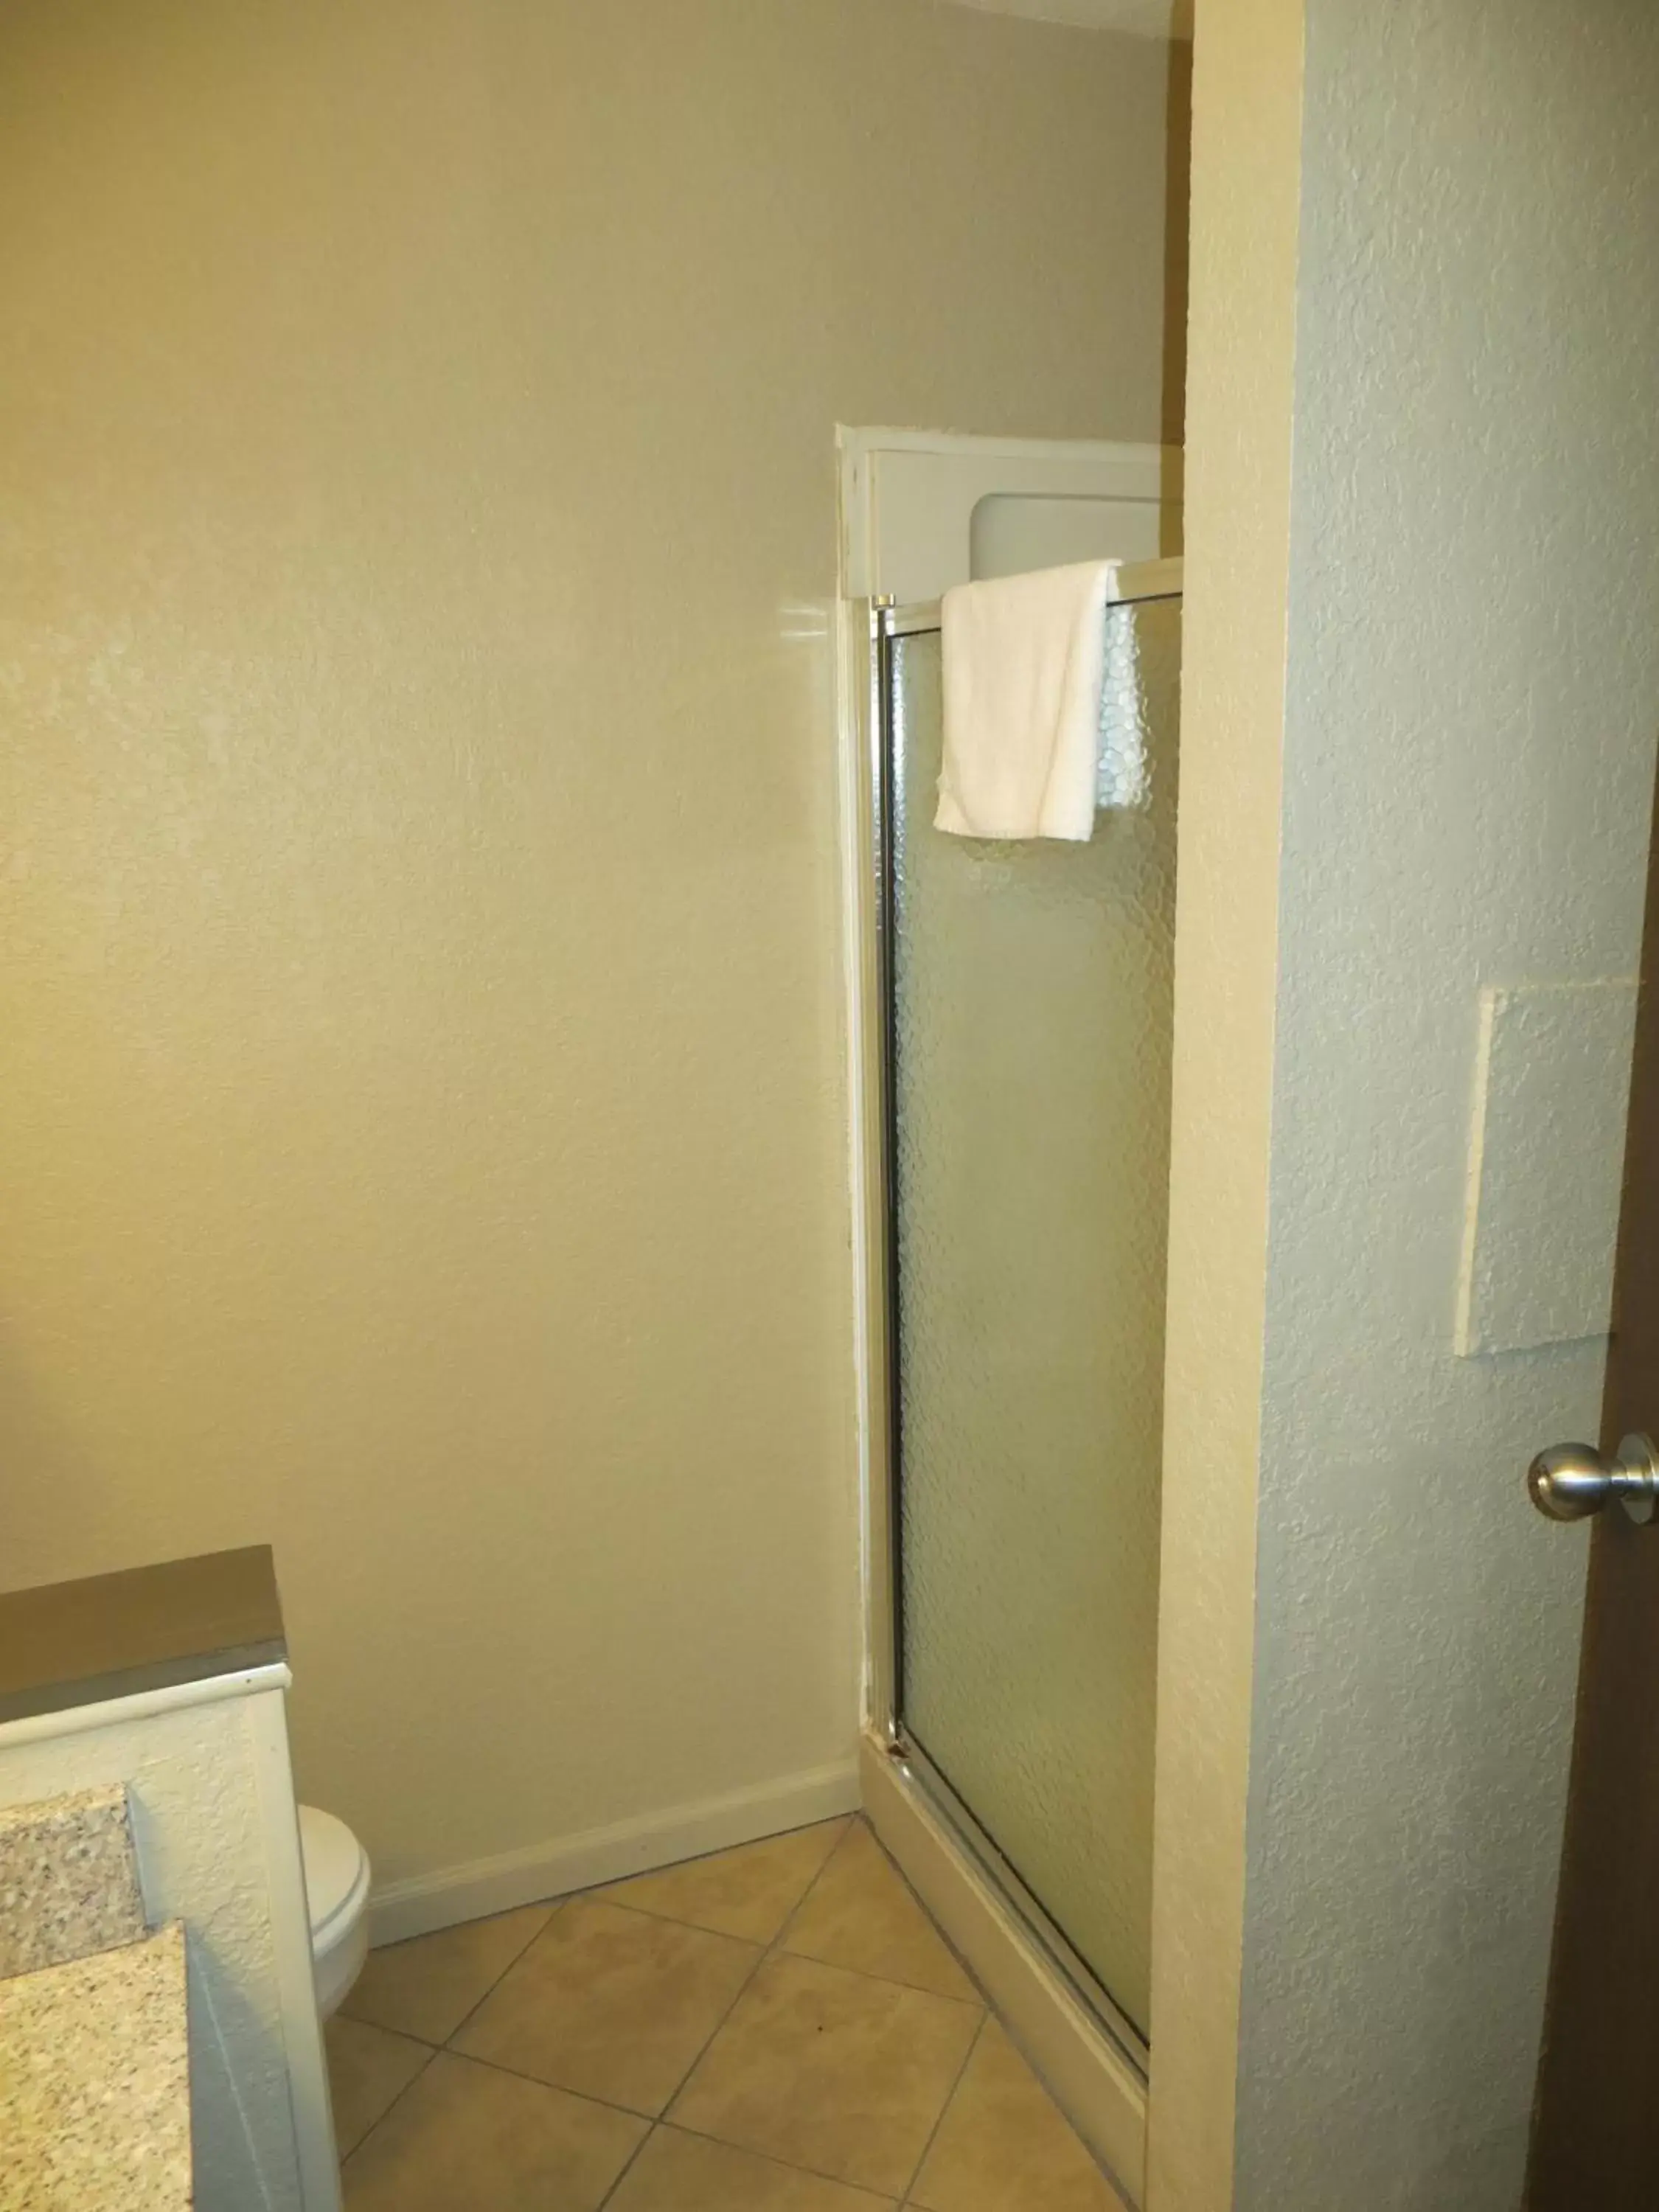 Shower, Bathroom in Americourt Hotel and Suites - Elizabethton